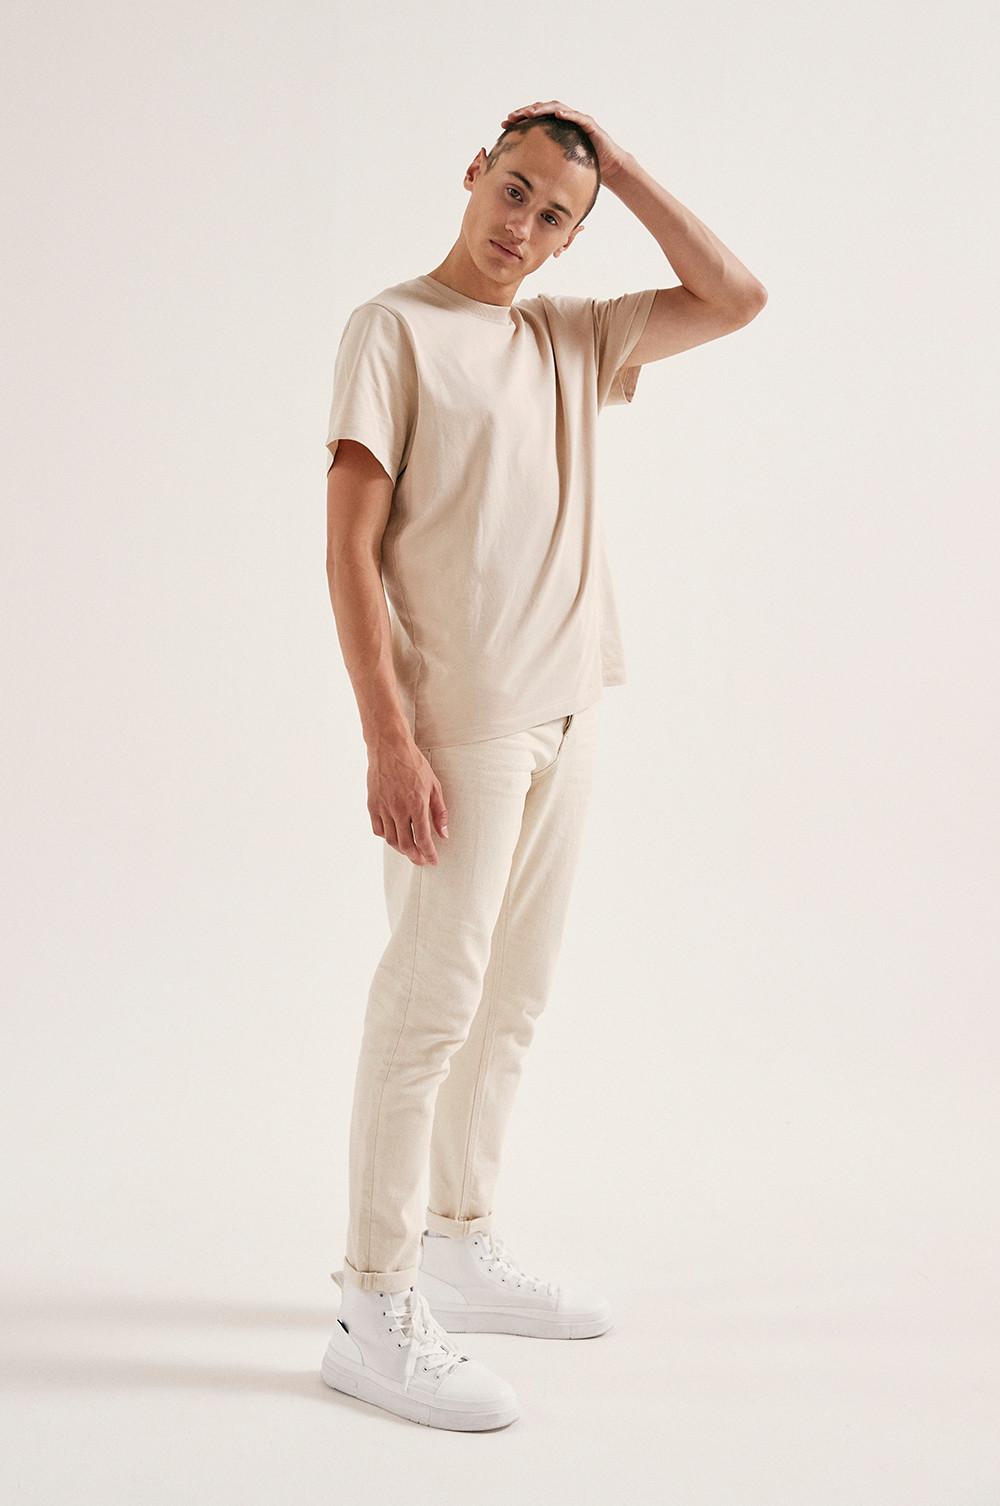 Model wearing Ecru Jeans and Ecru T-shirt